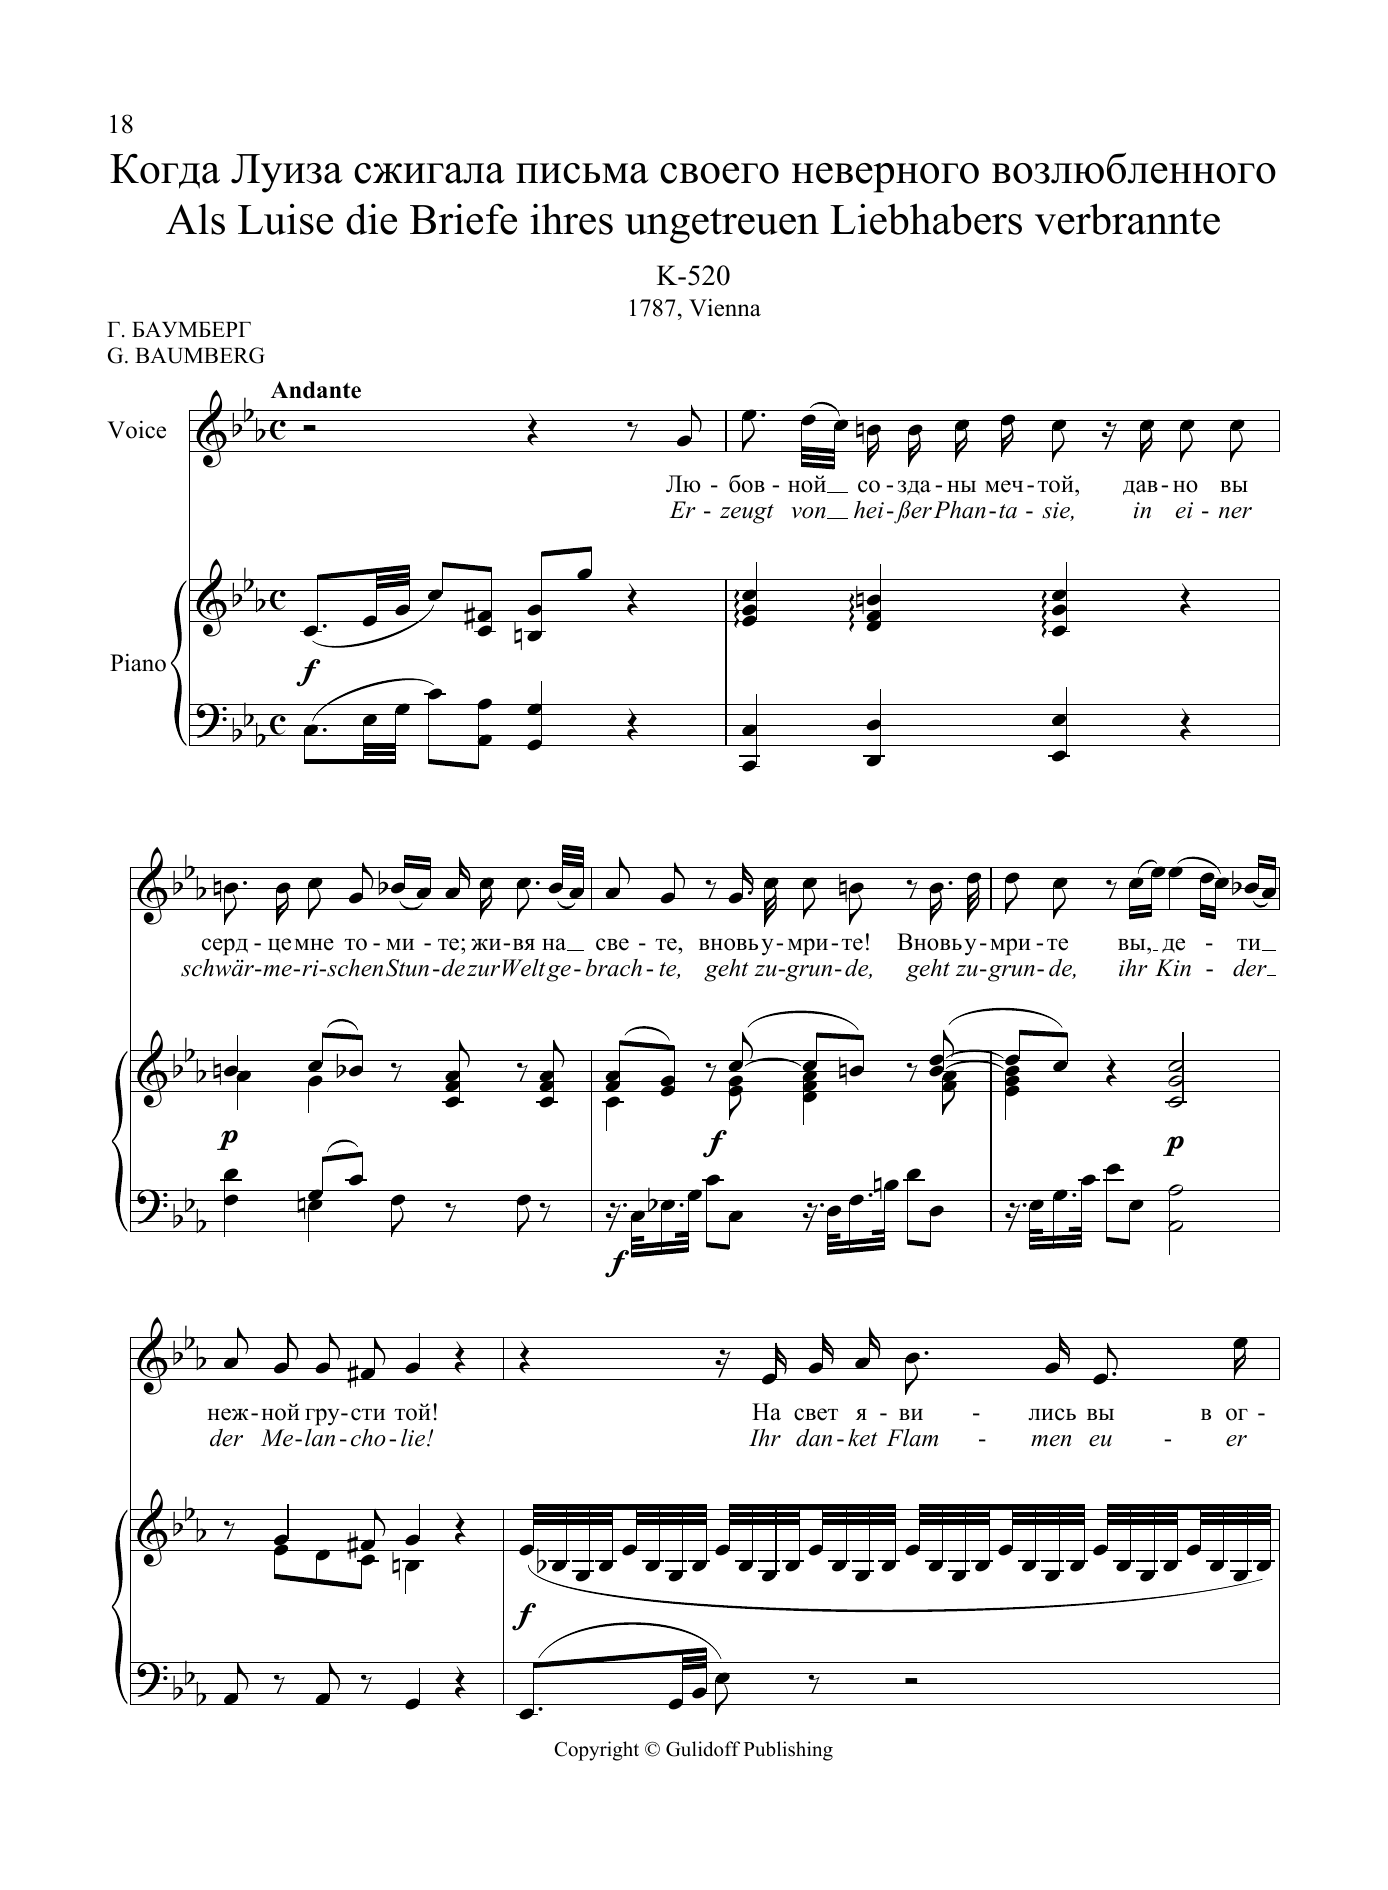 Download Wolfgang Amadeus Mozart 36 Songs Vol. 2: Als Luise die Briefe i Sheet Music